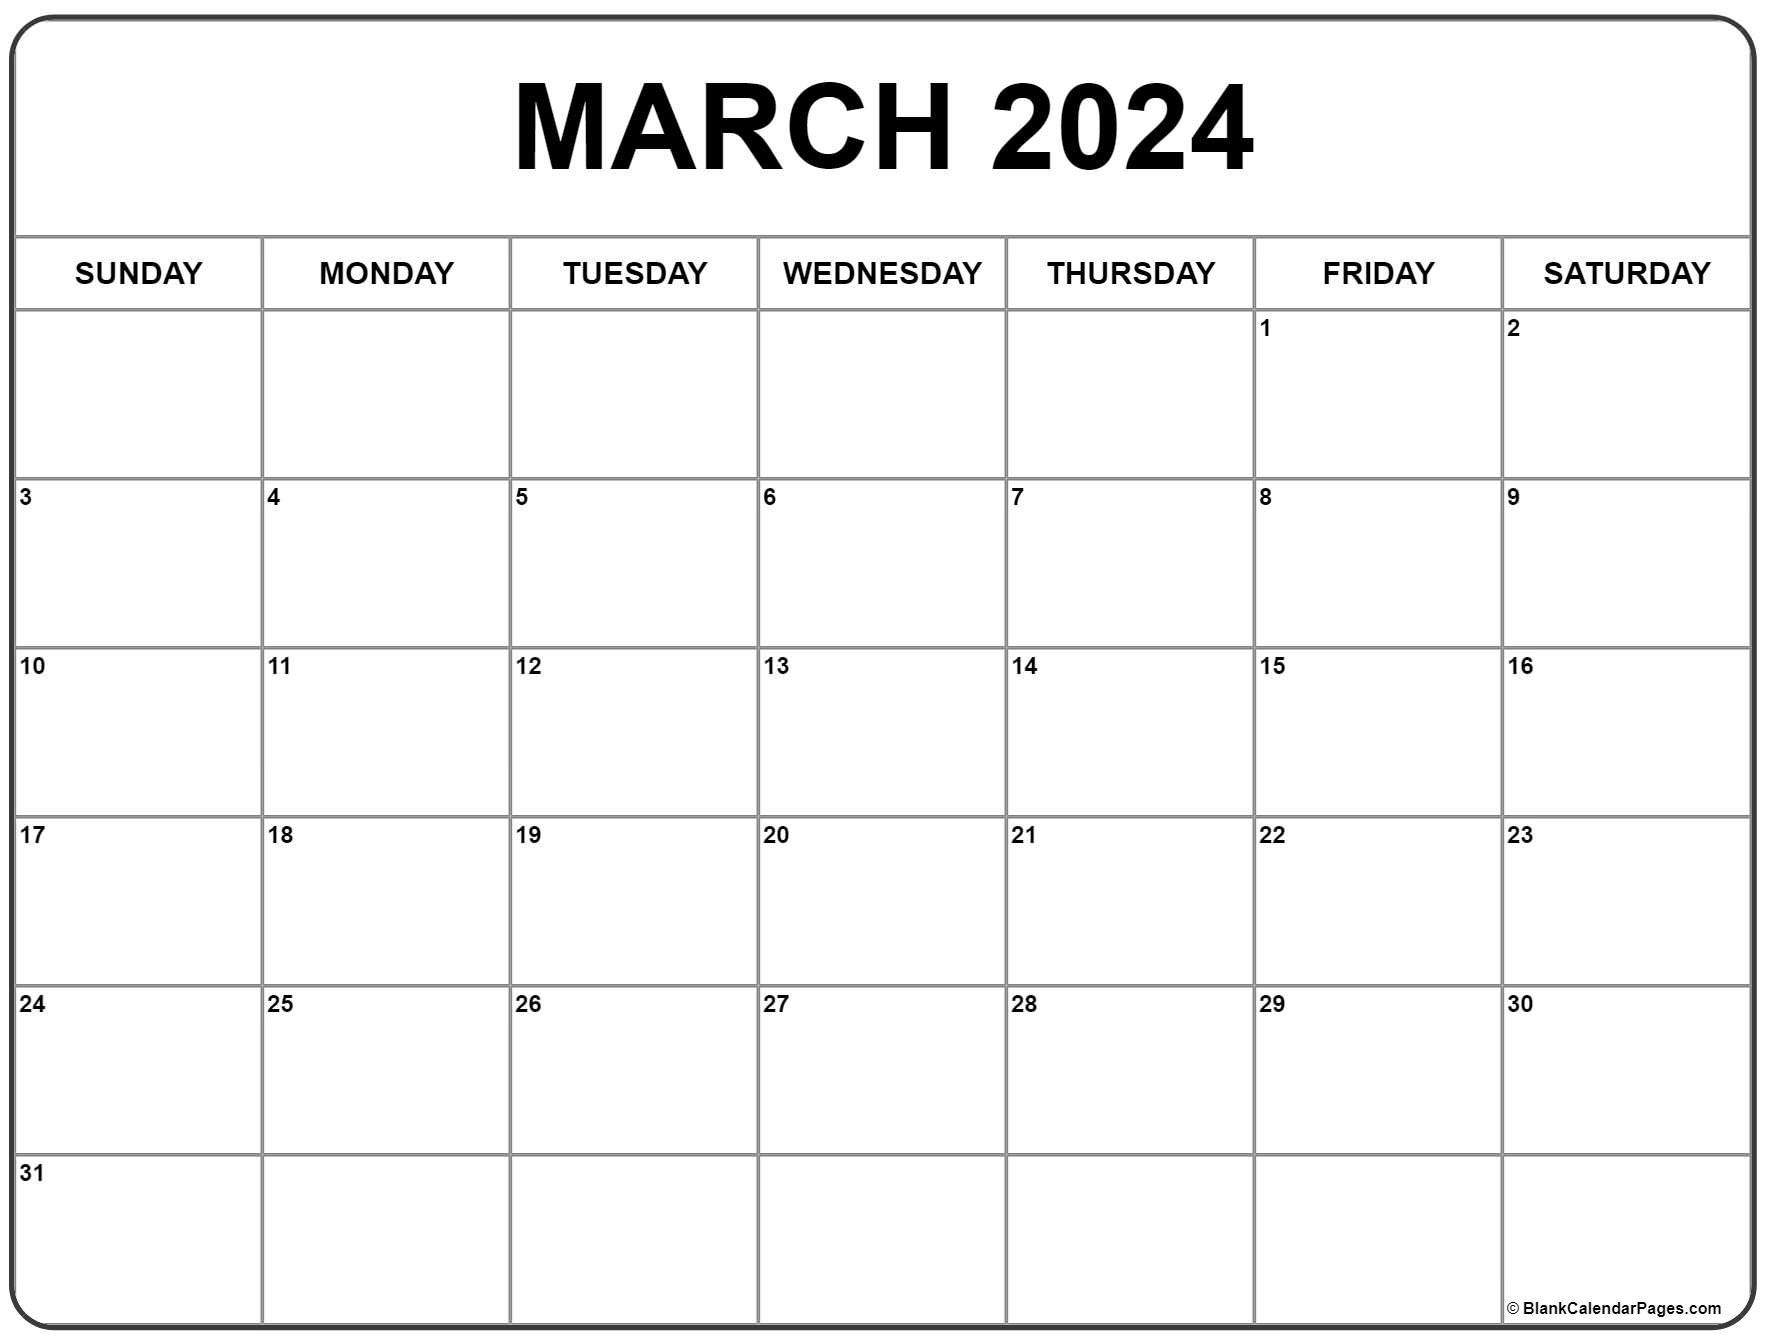 March 2024 Calendar | Free Printable Calendar inside Free Printable Calendar 2024 March